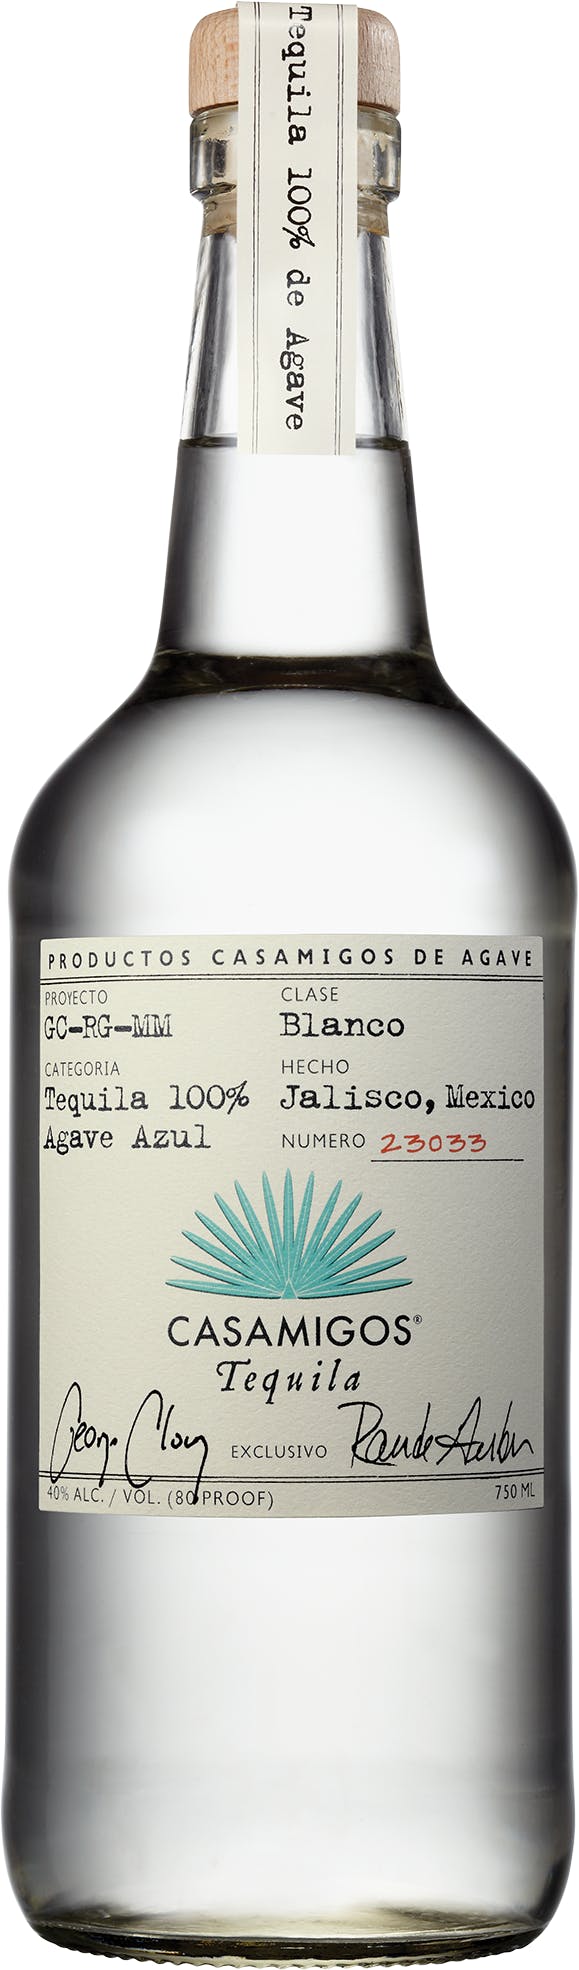 Casamigos Tequila Blanco 750ml - Eastside Cellars